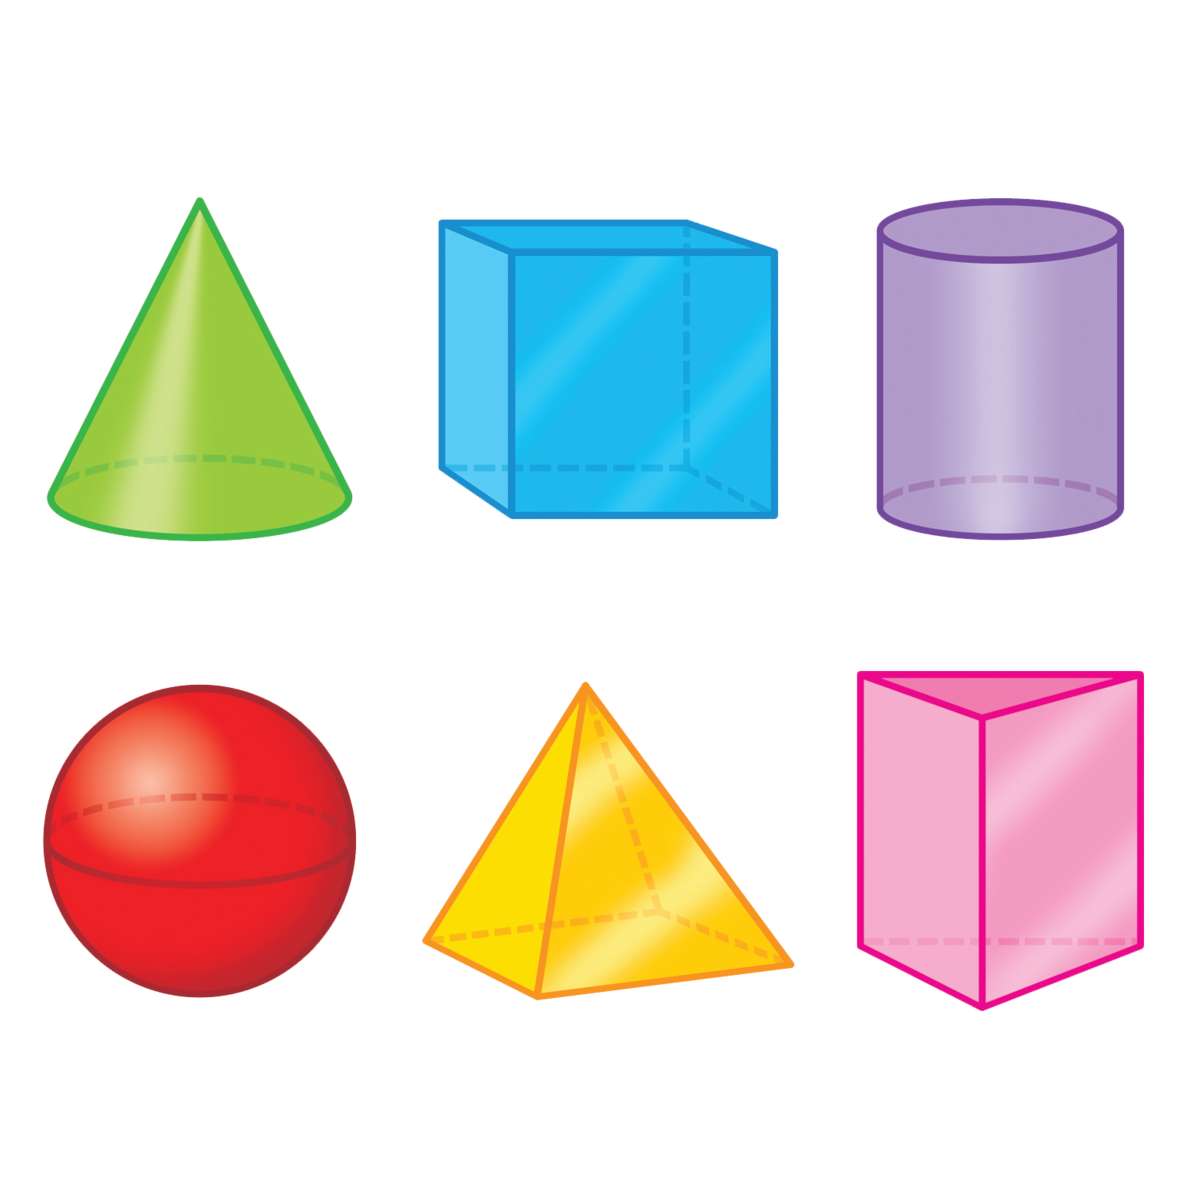 Фигуры. Шар куб пирамида Призма. Геометрические тела куб шар цилиндр конус Призма. Куб,пирамида Призма конус. Геометрические фигуры в объеме.